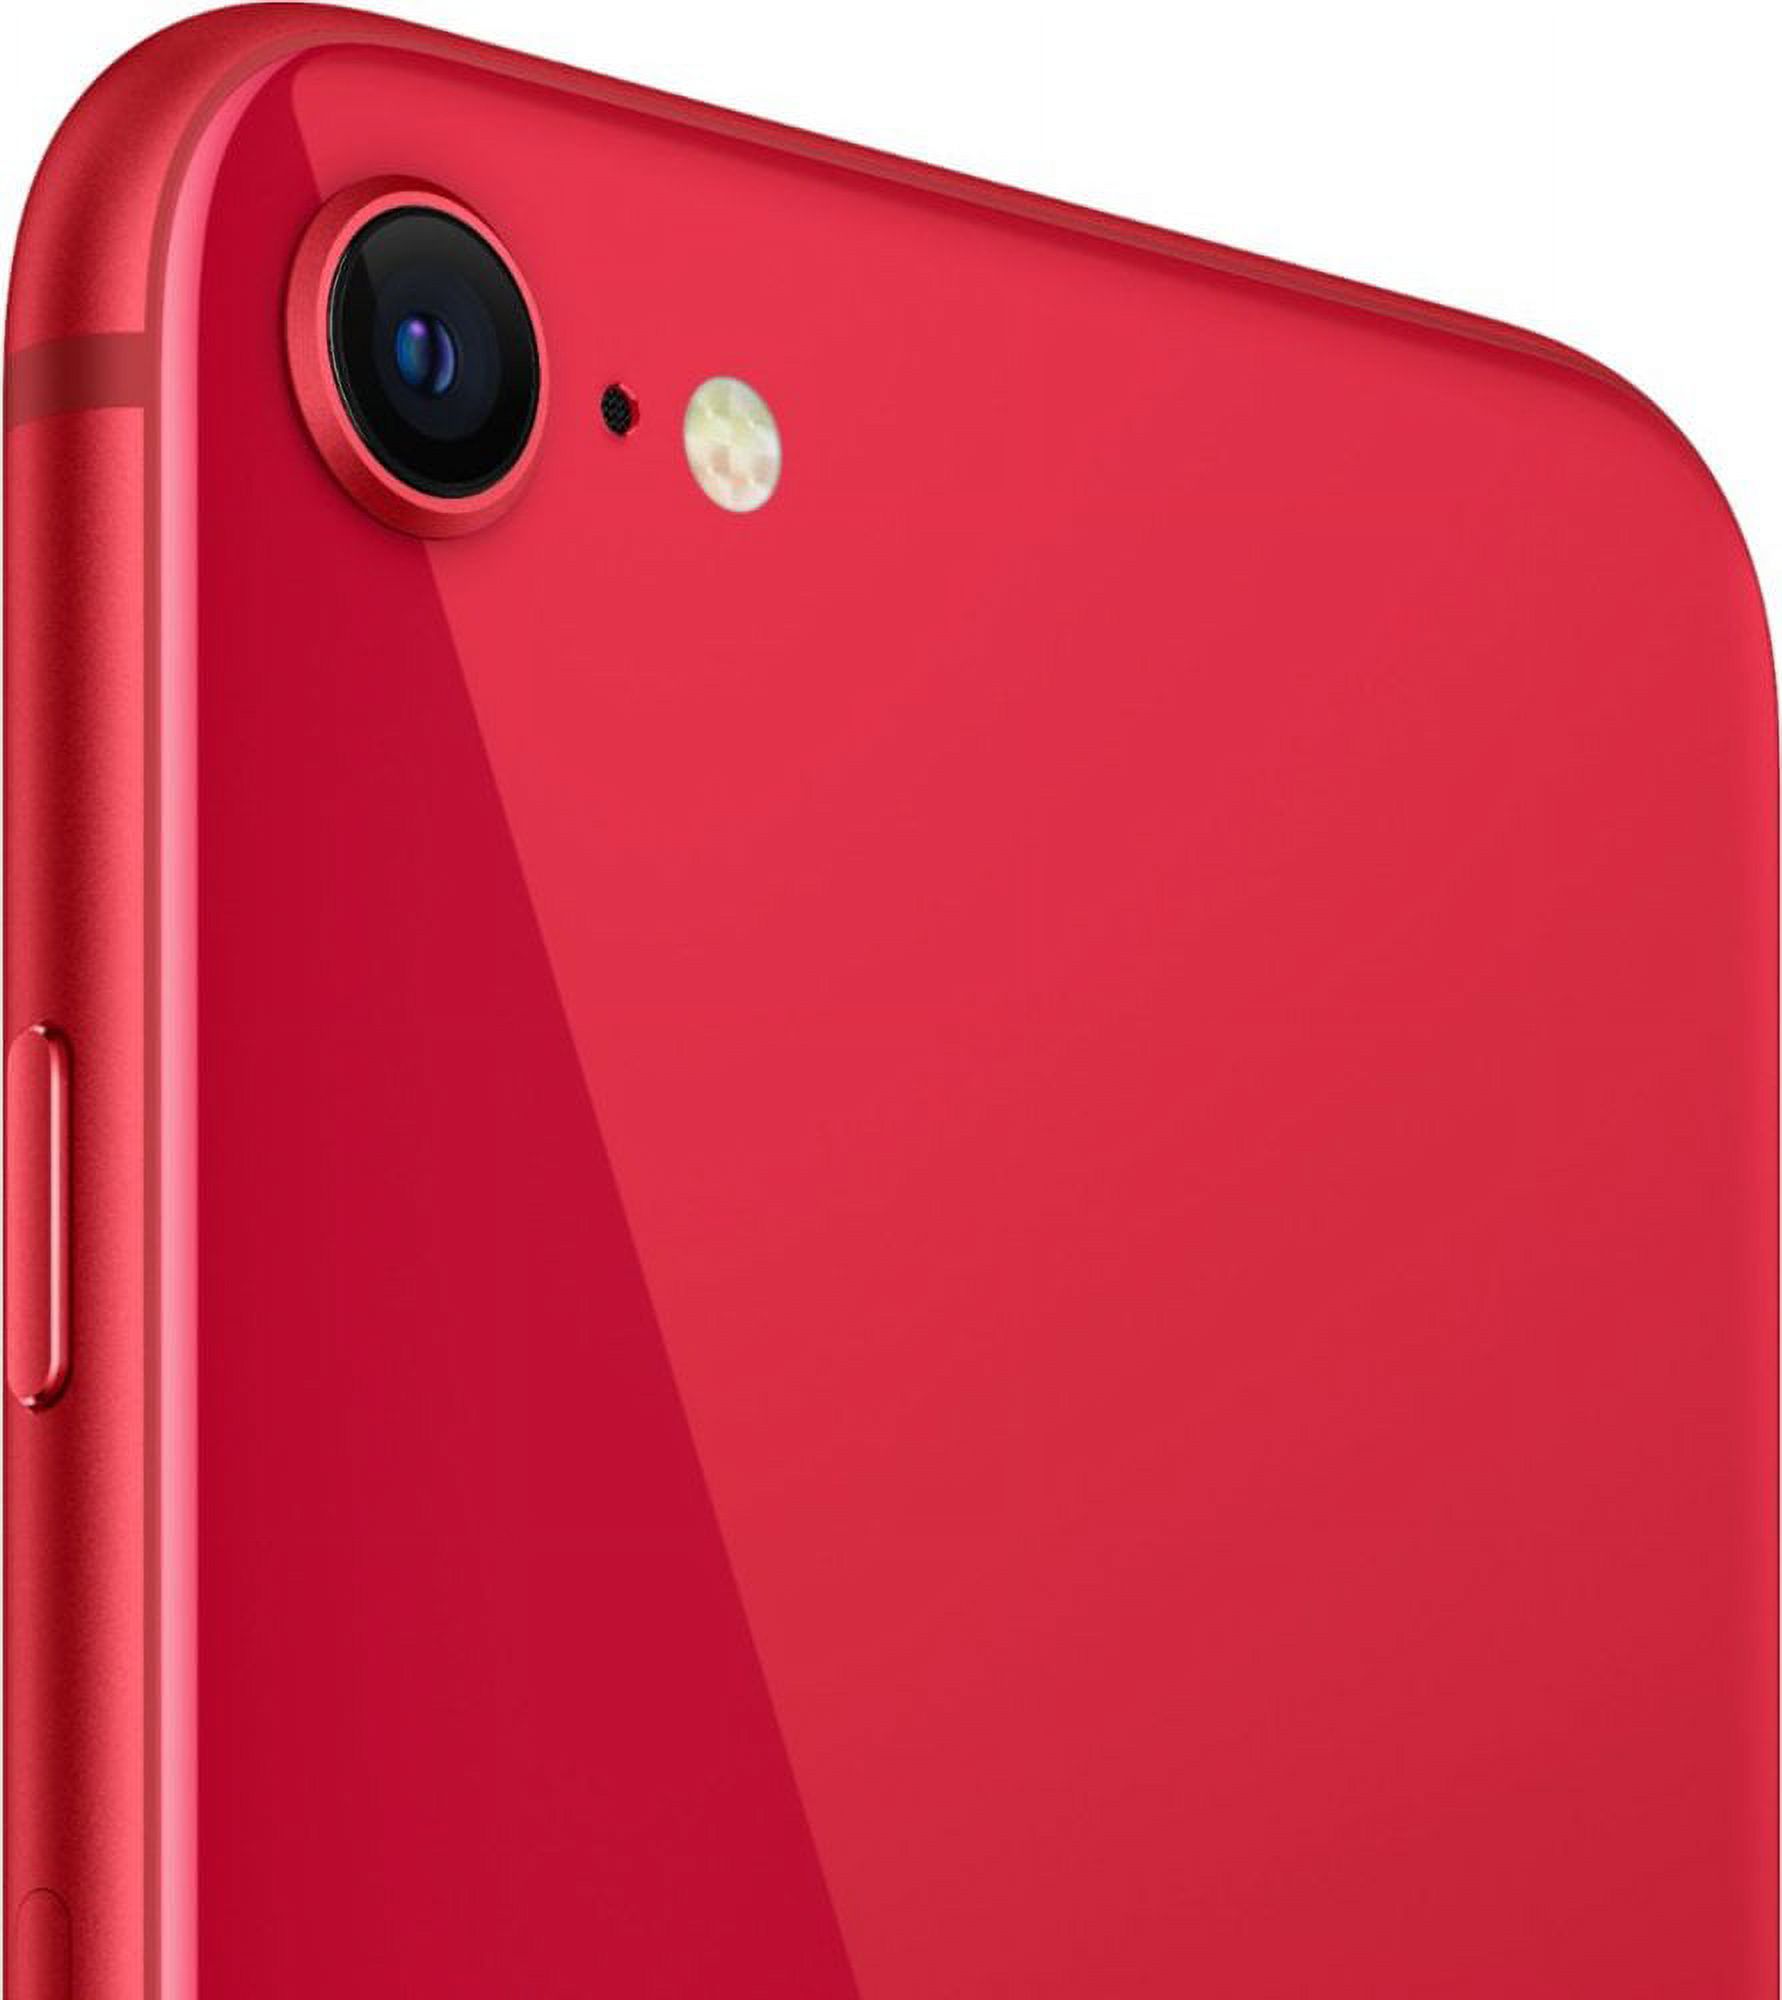 Apple iPhone SE (2020) 128GB GSM/CDMA Fully Unlocked Phone - Red (Grade B Used) - image 3 of 4